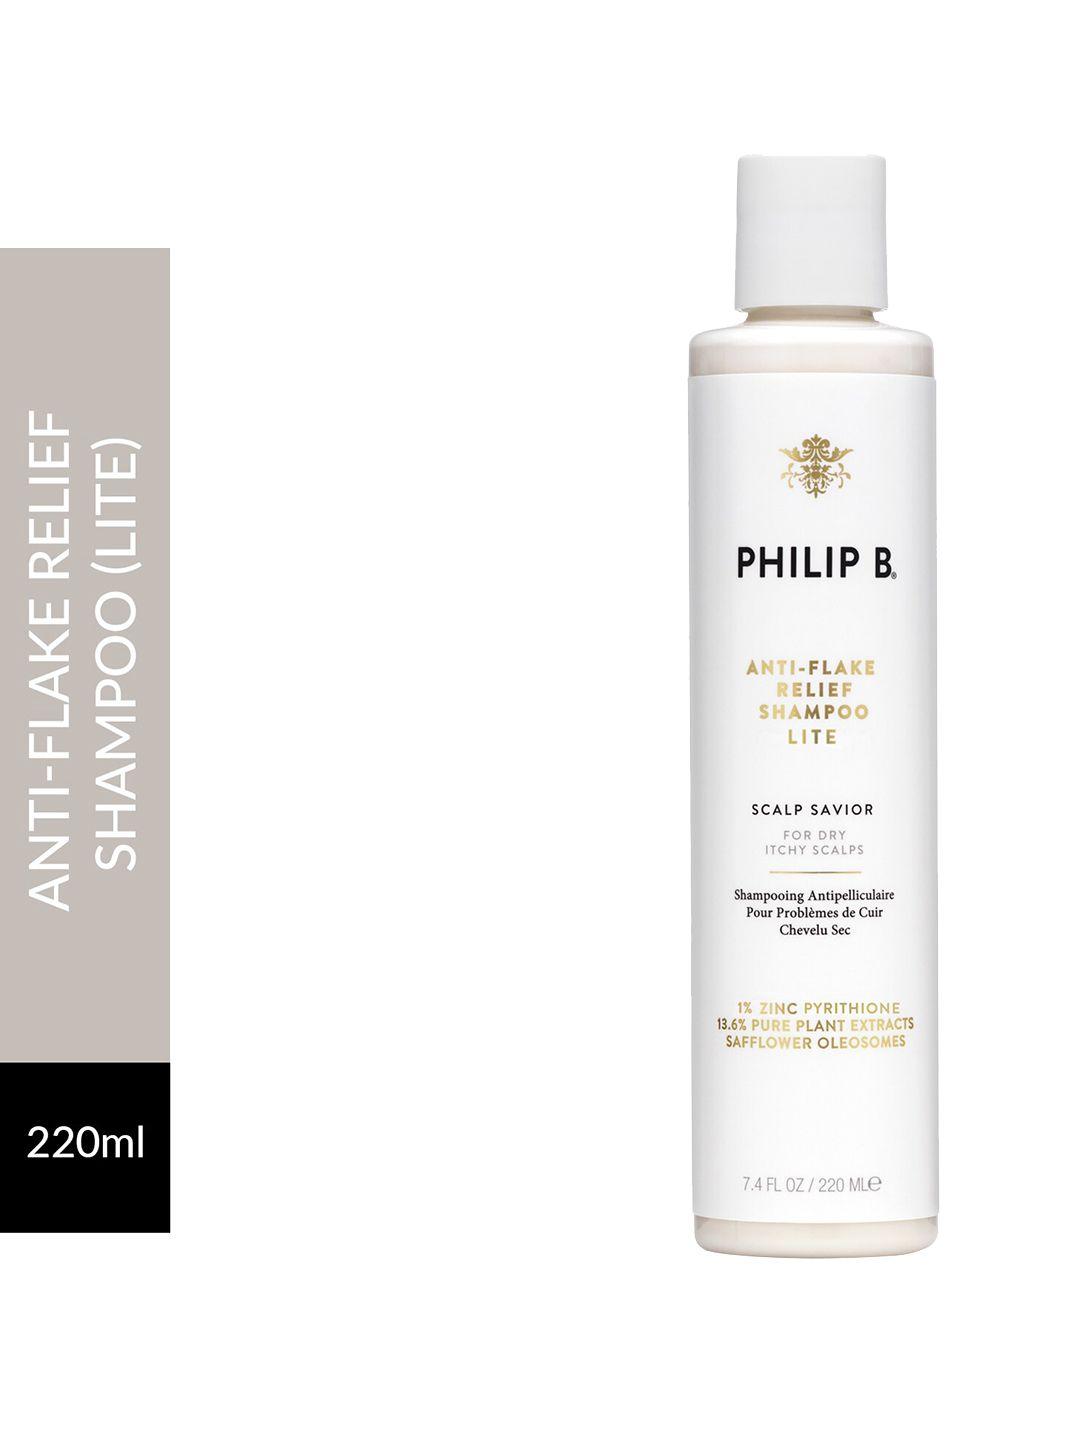 philip b anti-flake relief shampoo lite with safflower - 220 ml